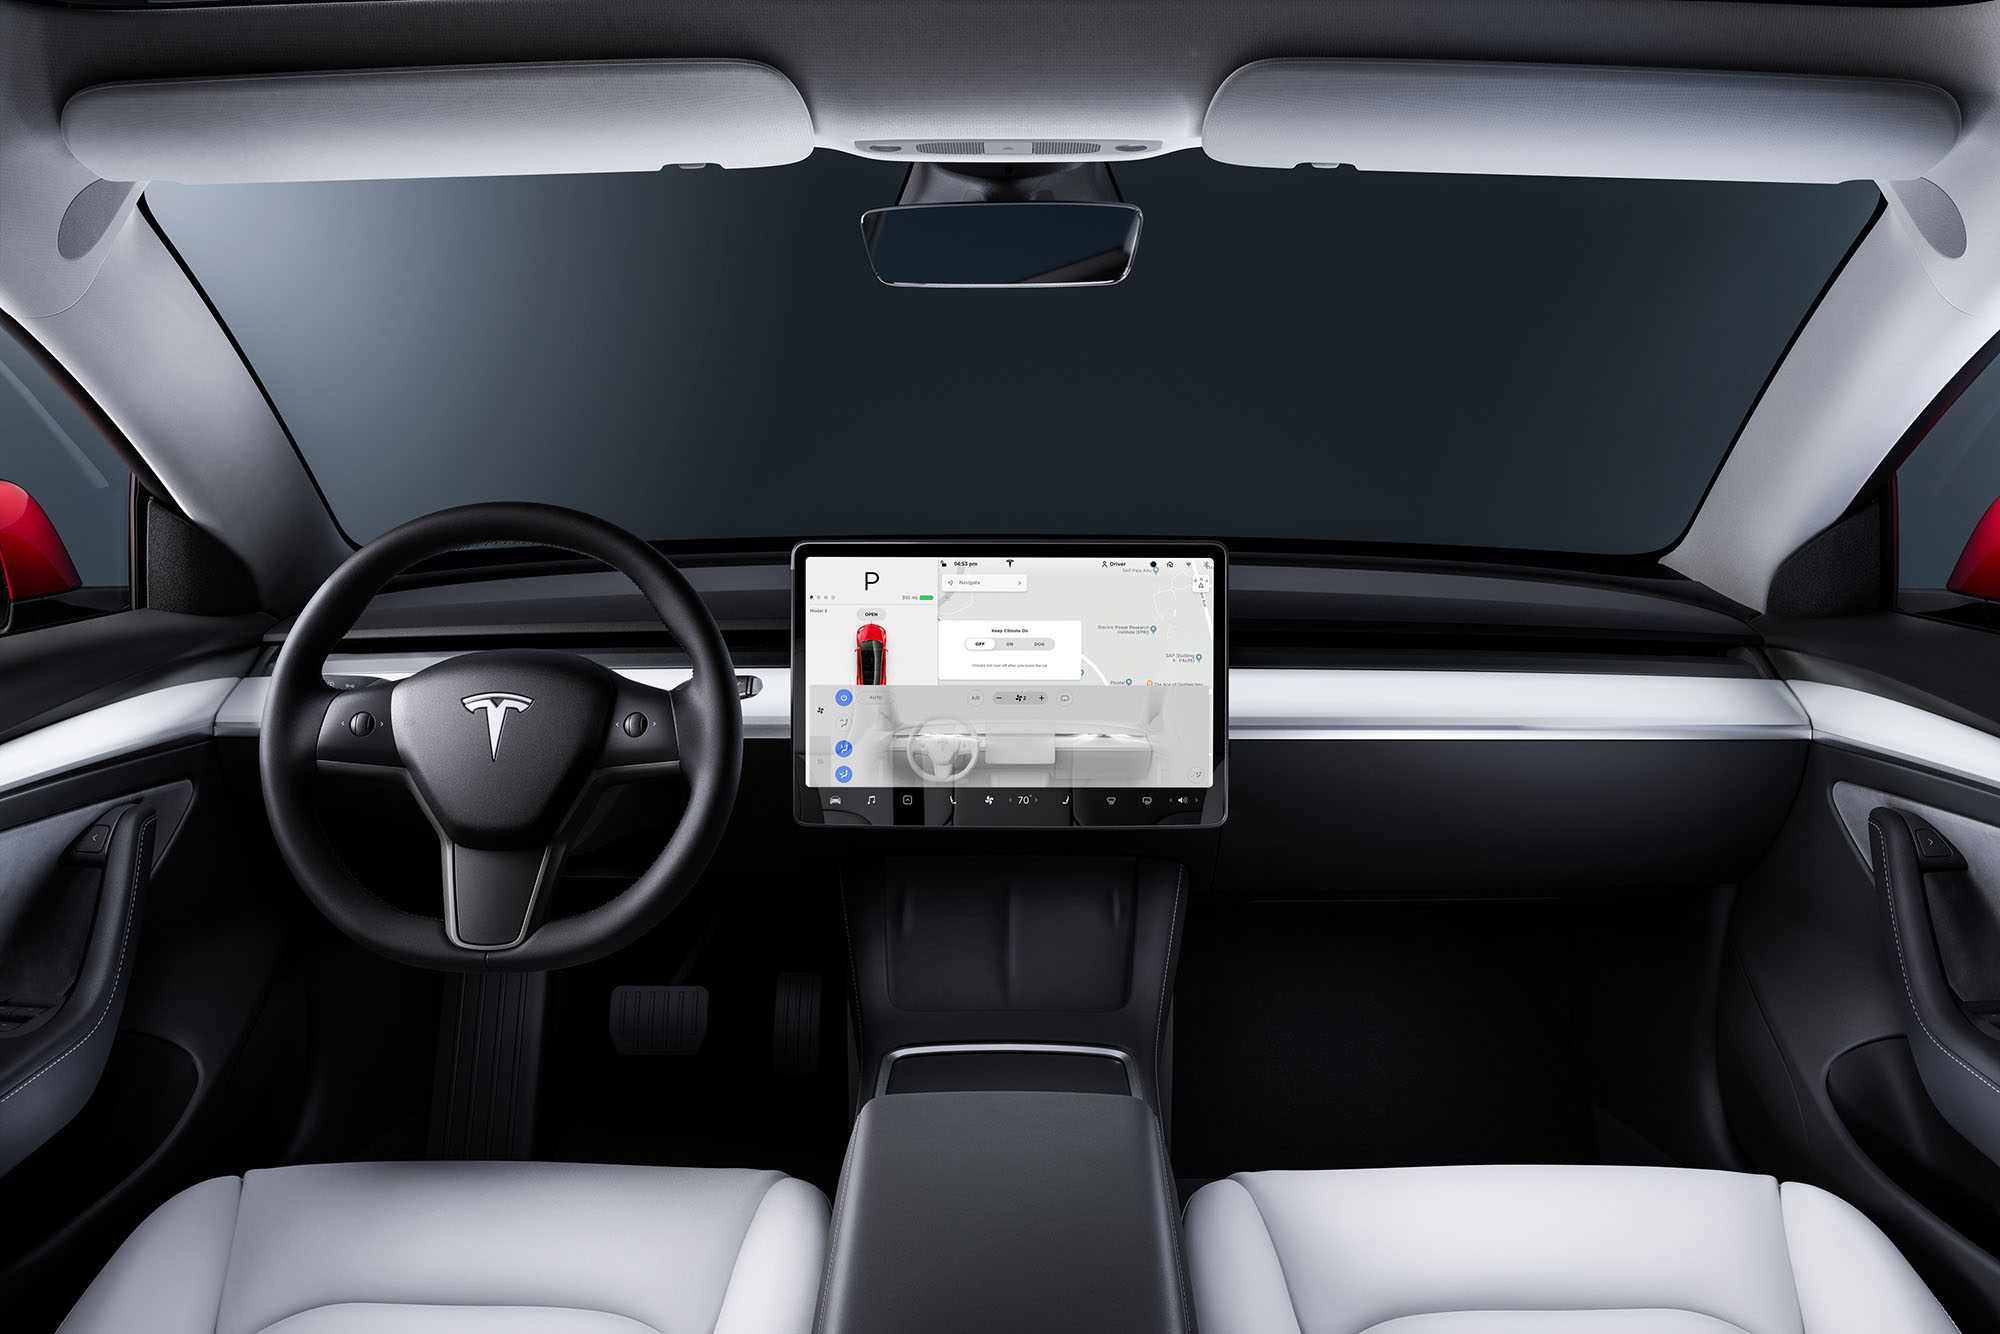 Steering wheel, dashboard, and front seats in Tesla Model 3